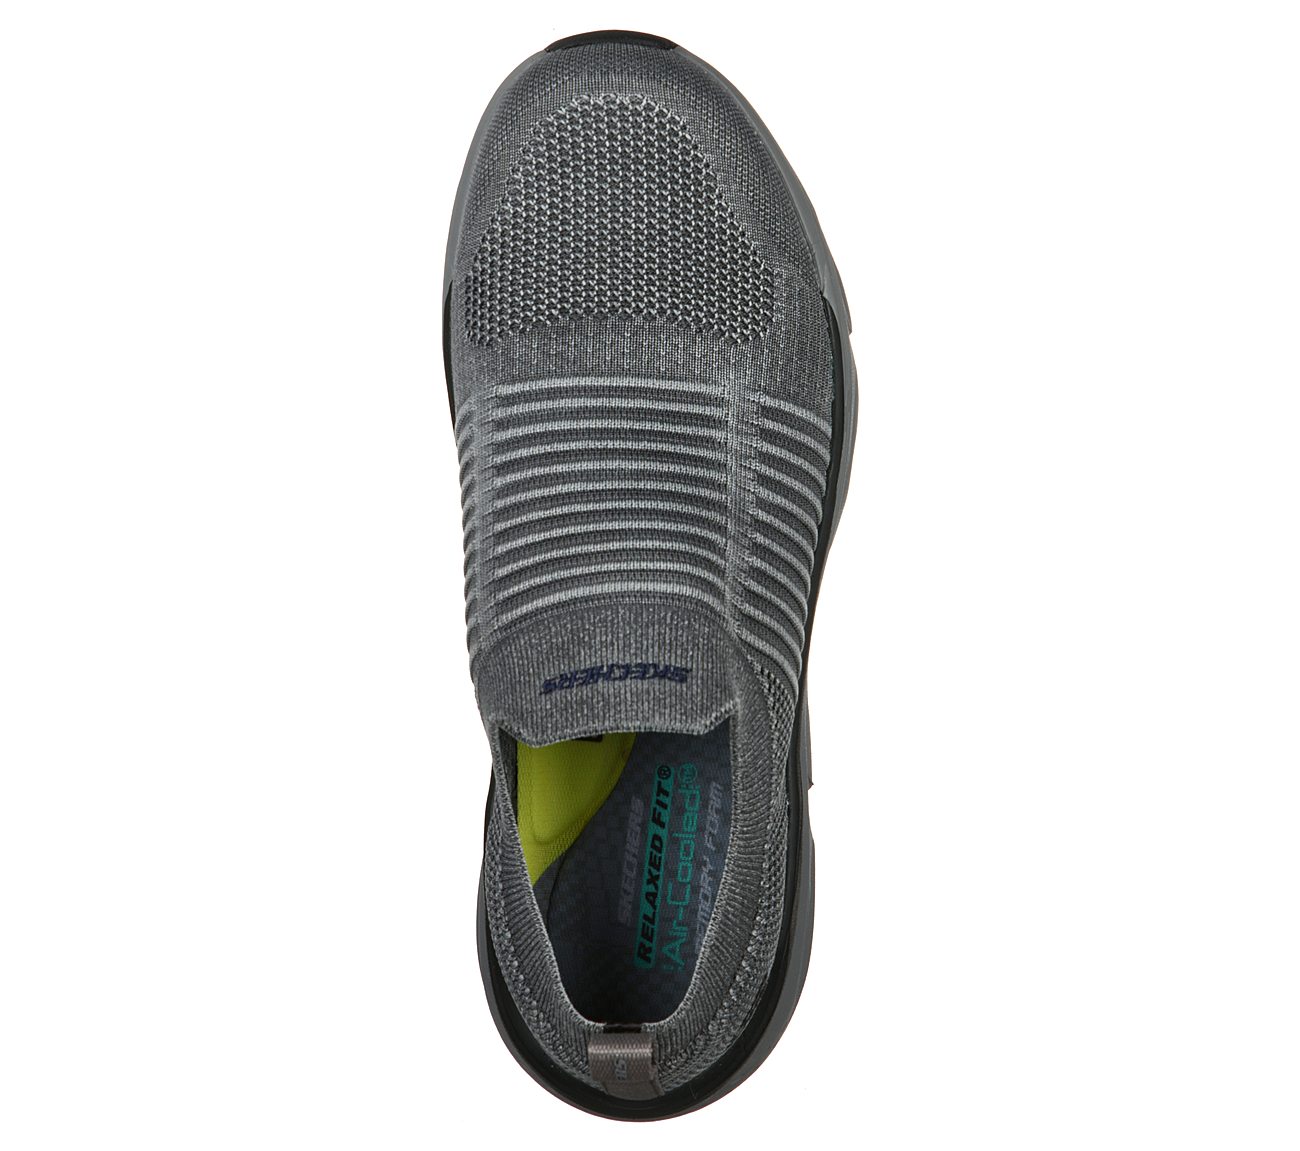 DELMONT - JENKO, CCHARCOAL Footwear Top View